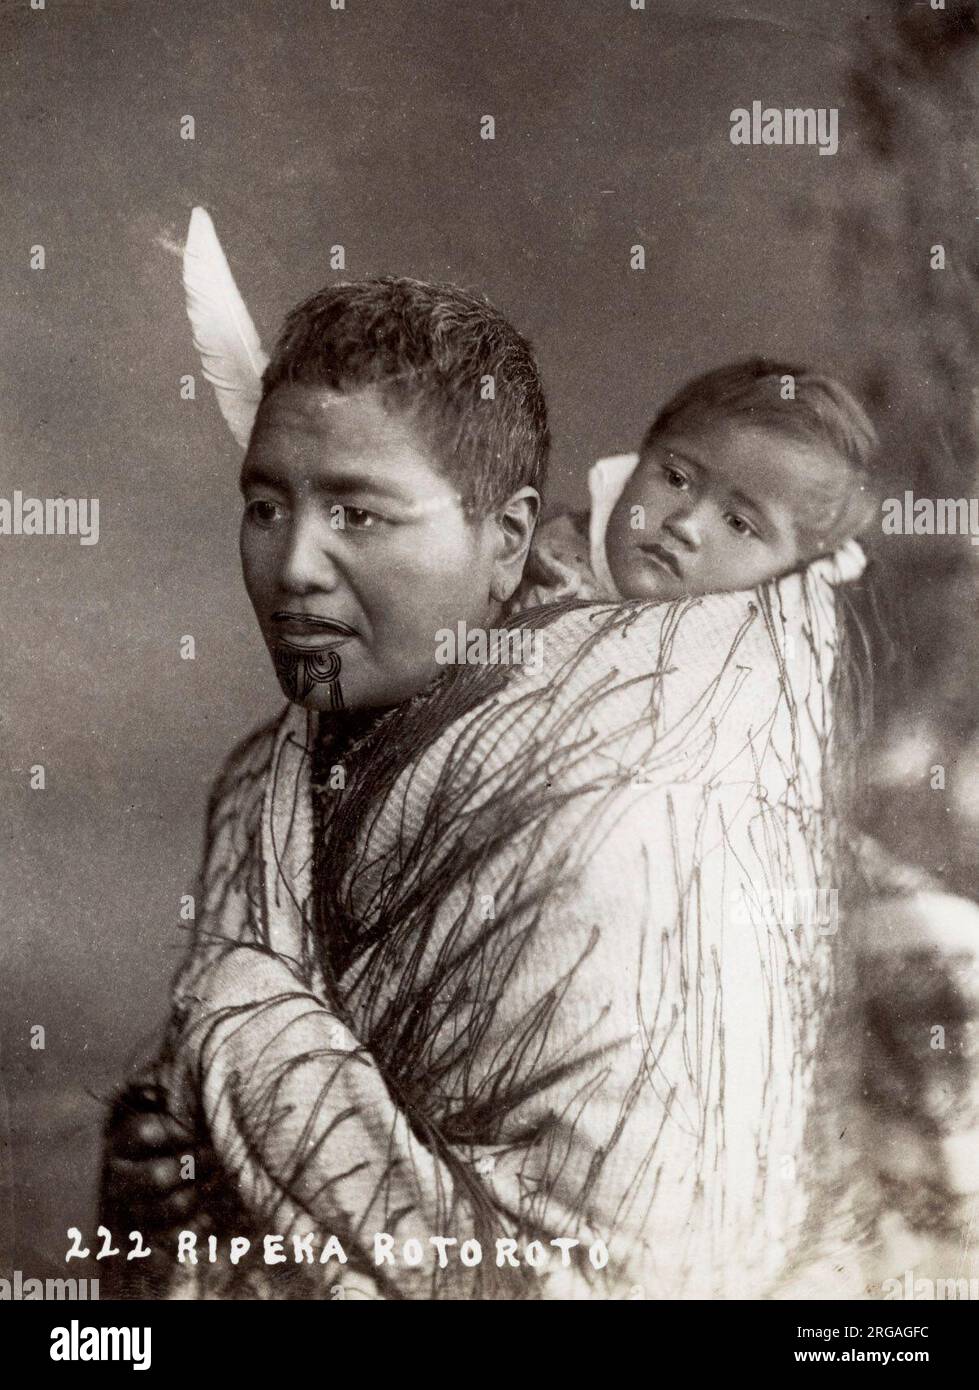 Vintage 19. Jahrhundert Fotografie - Maori Frau mit Baby auf dem Rücken, Ripeke Rotoroto, Neuseeland. Stockfoto